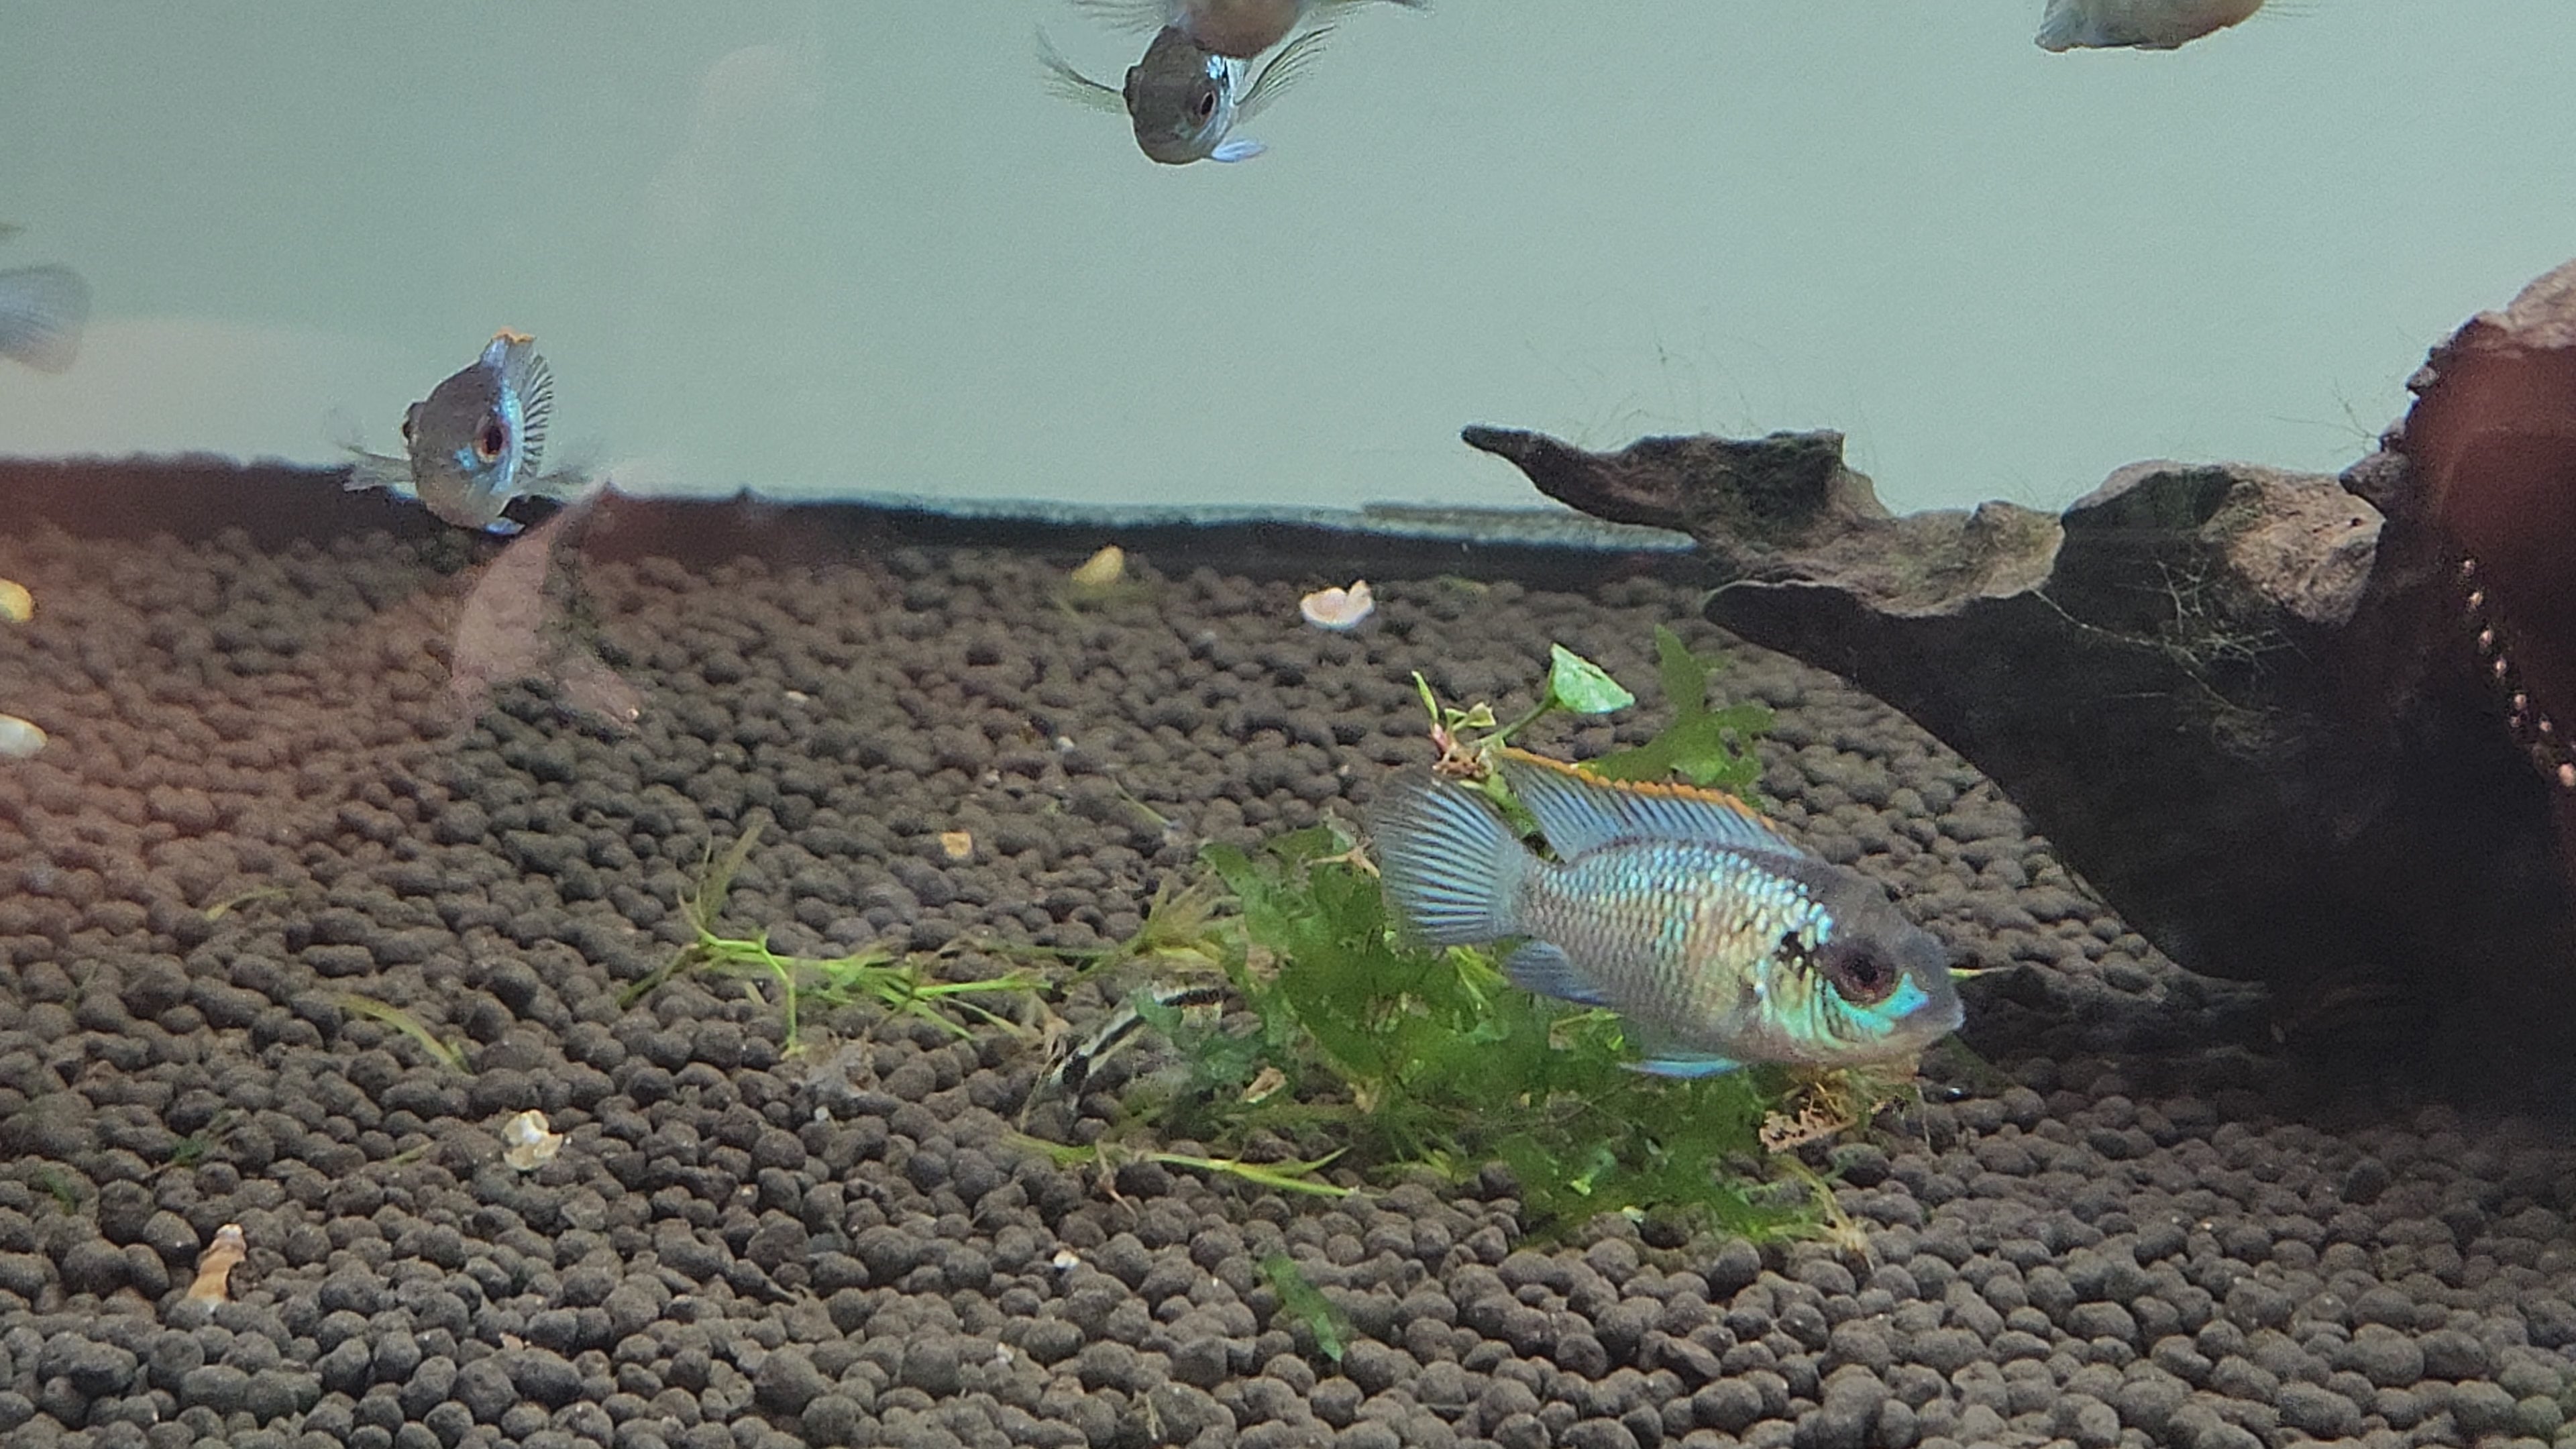 (TROP-063)U043 (3 fish) Electric Blue Acara (Andinoacara pulcher)